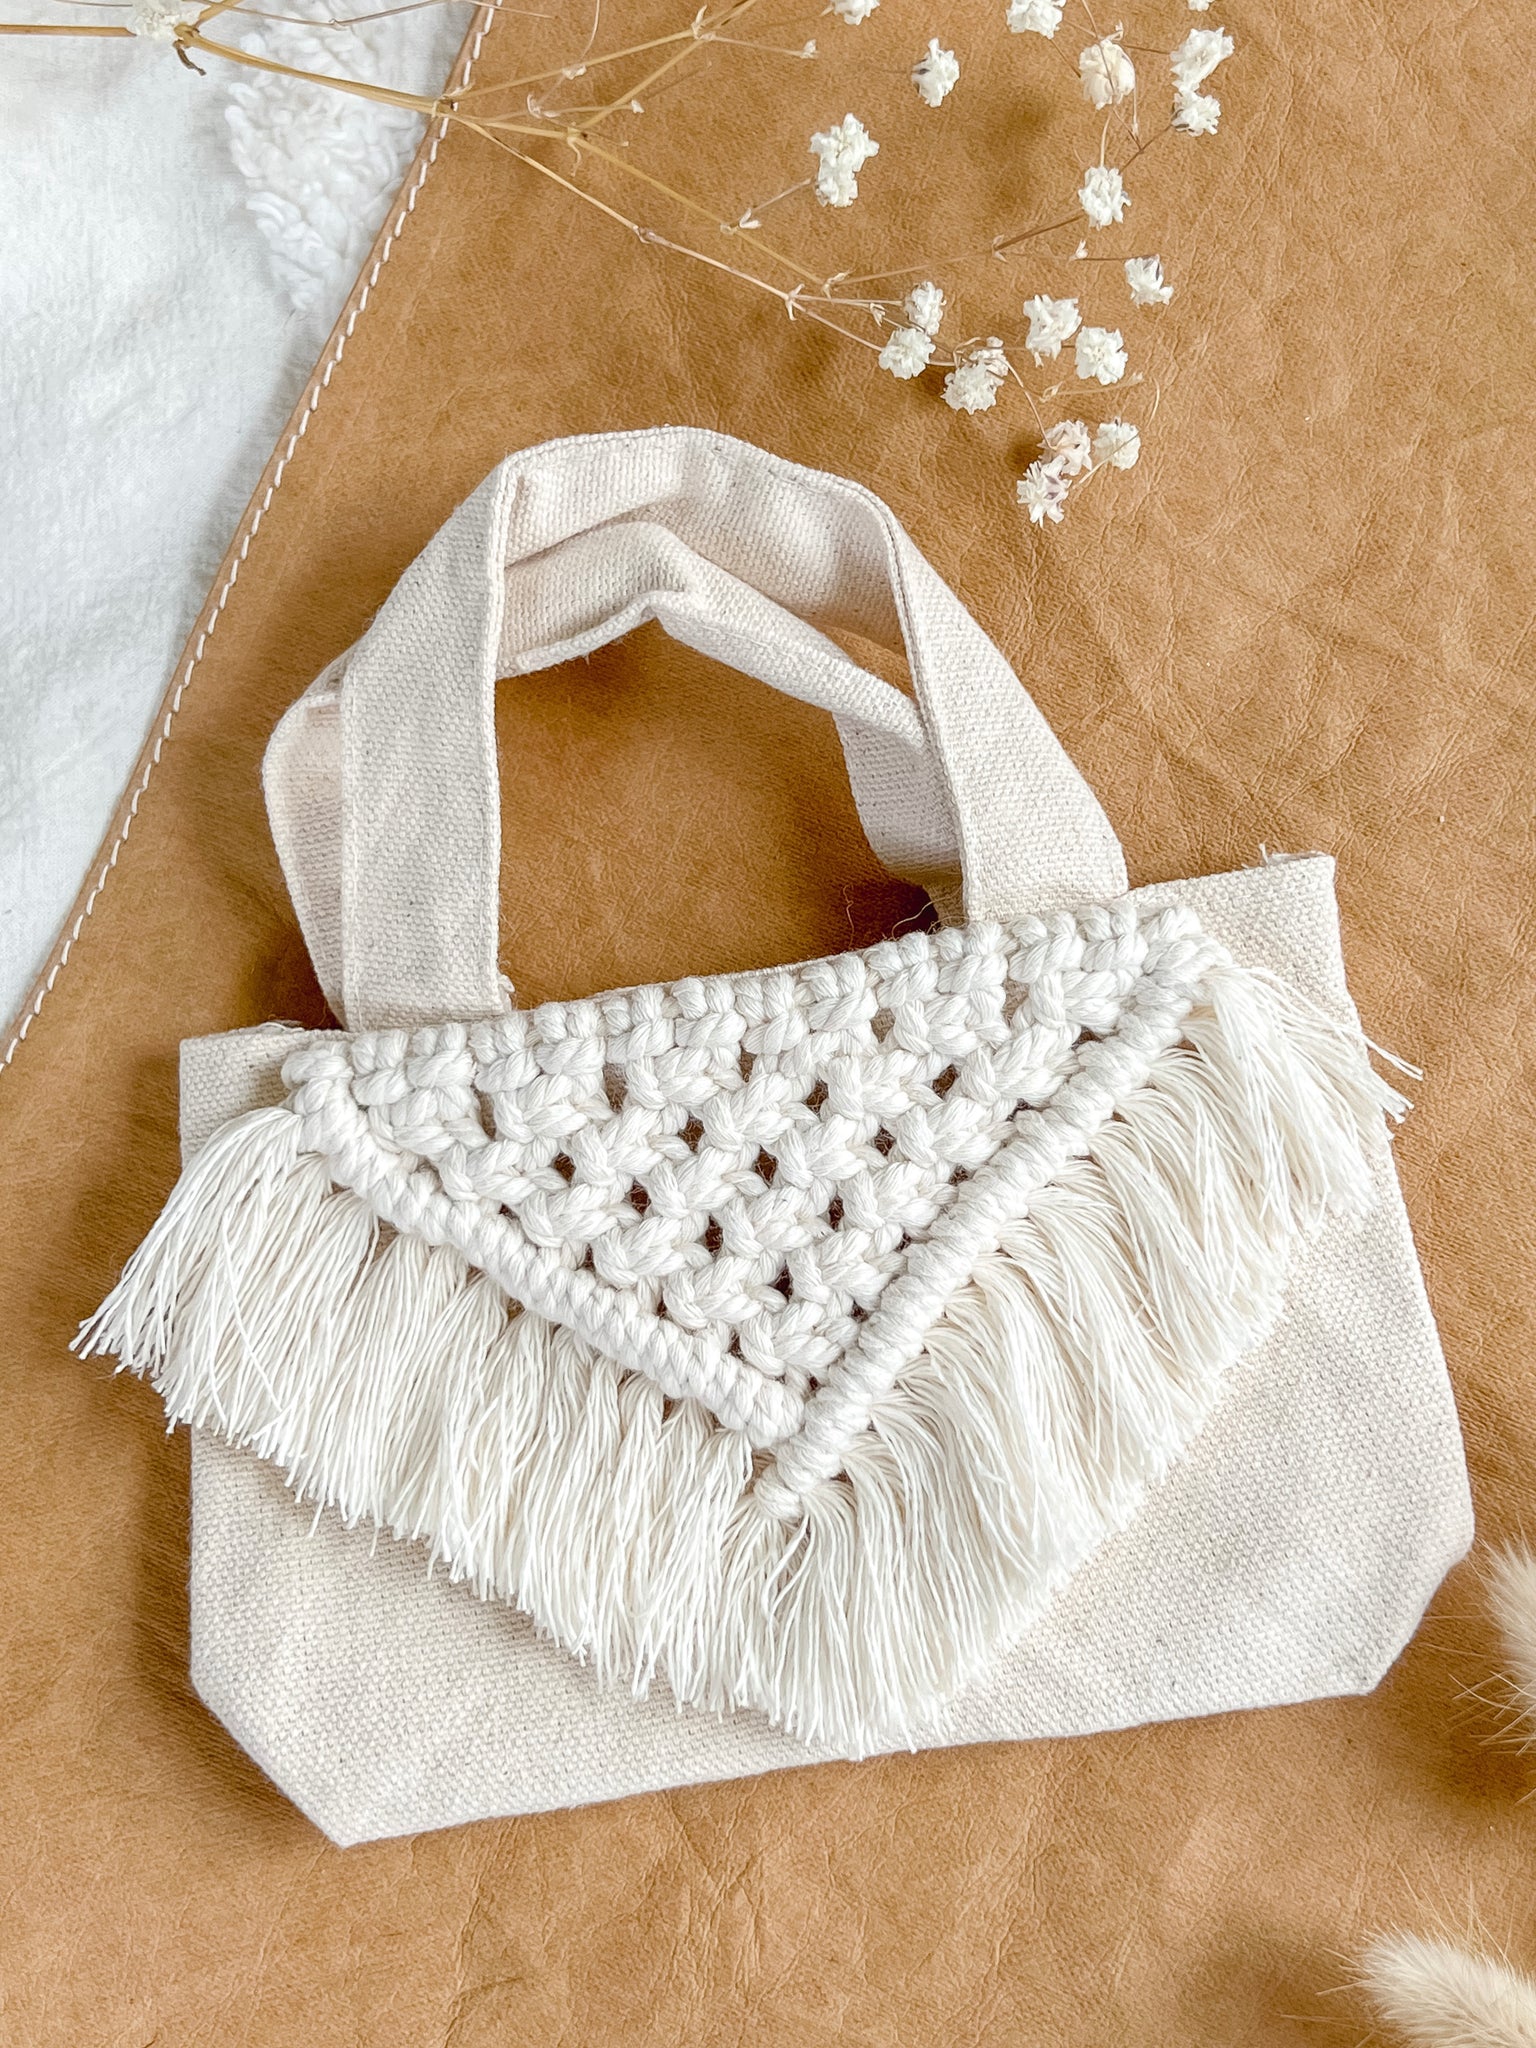 New Design Macrame Bag Pattern Wholesale / Viettime Craft